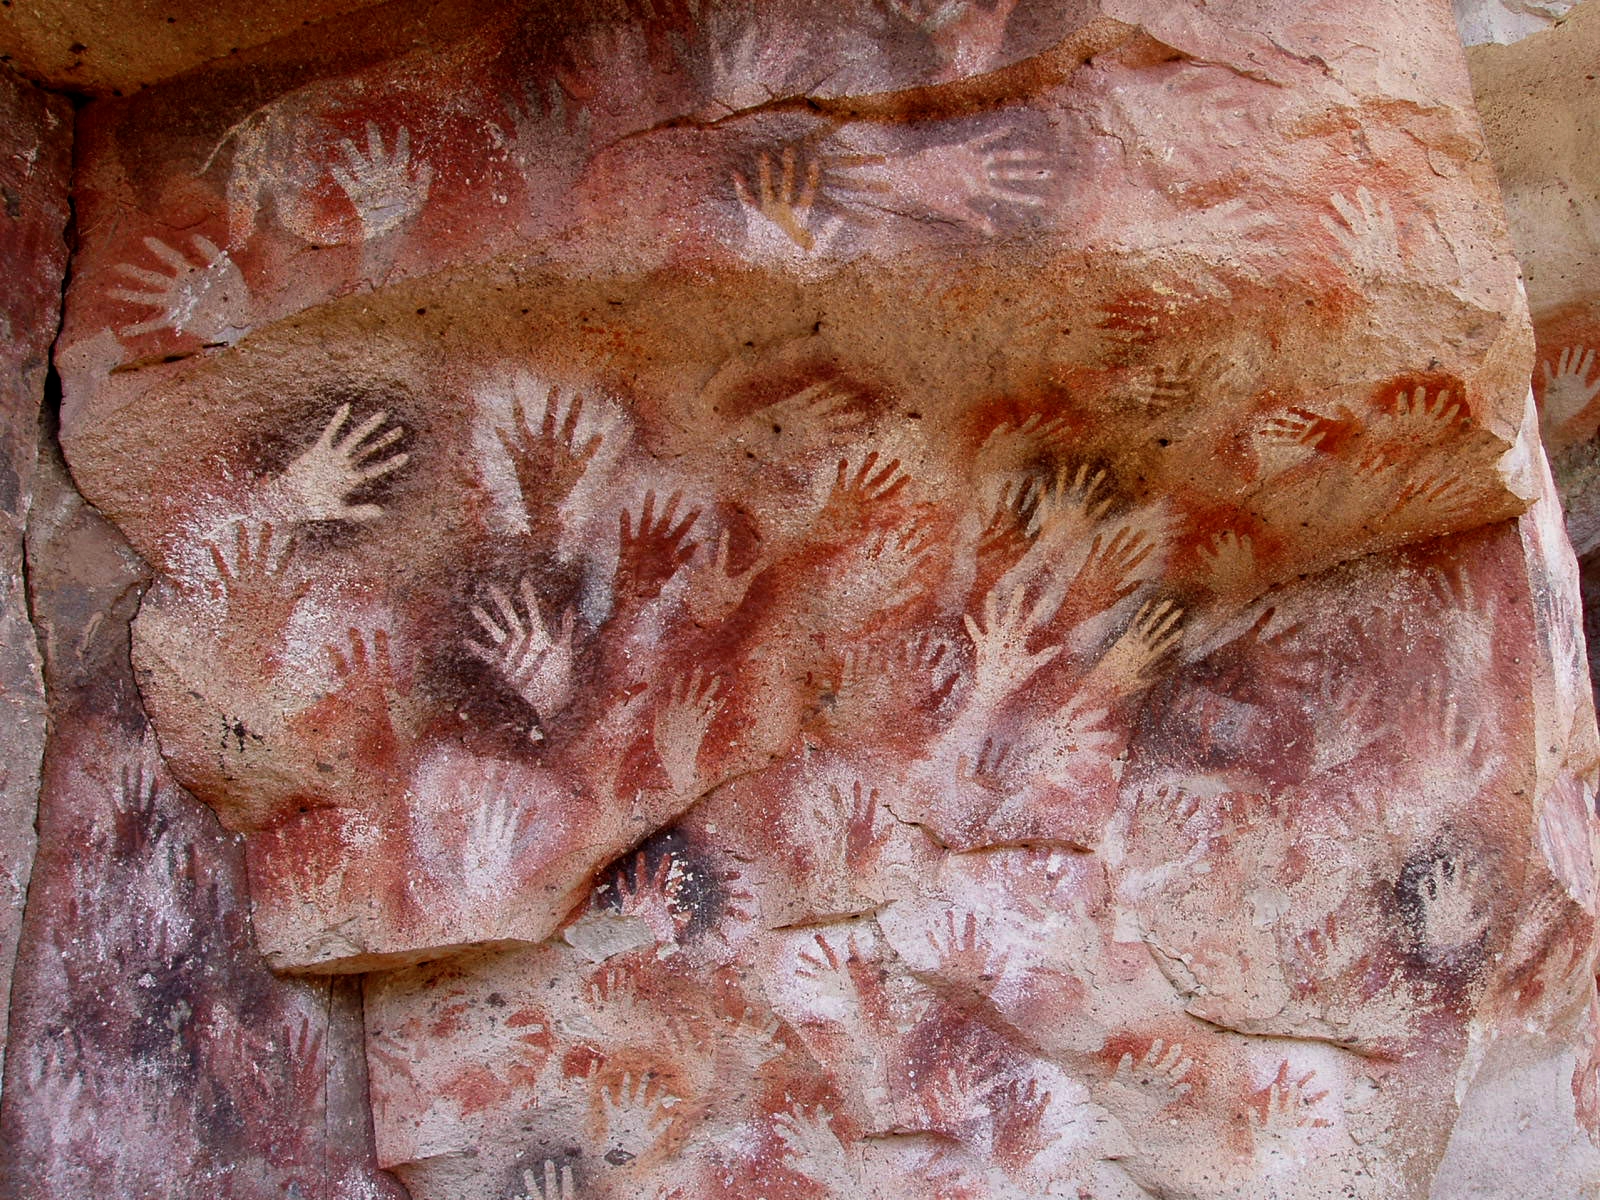 Women’s hands predominant in prehistoric paintings